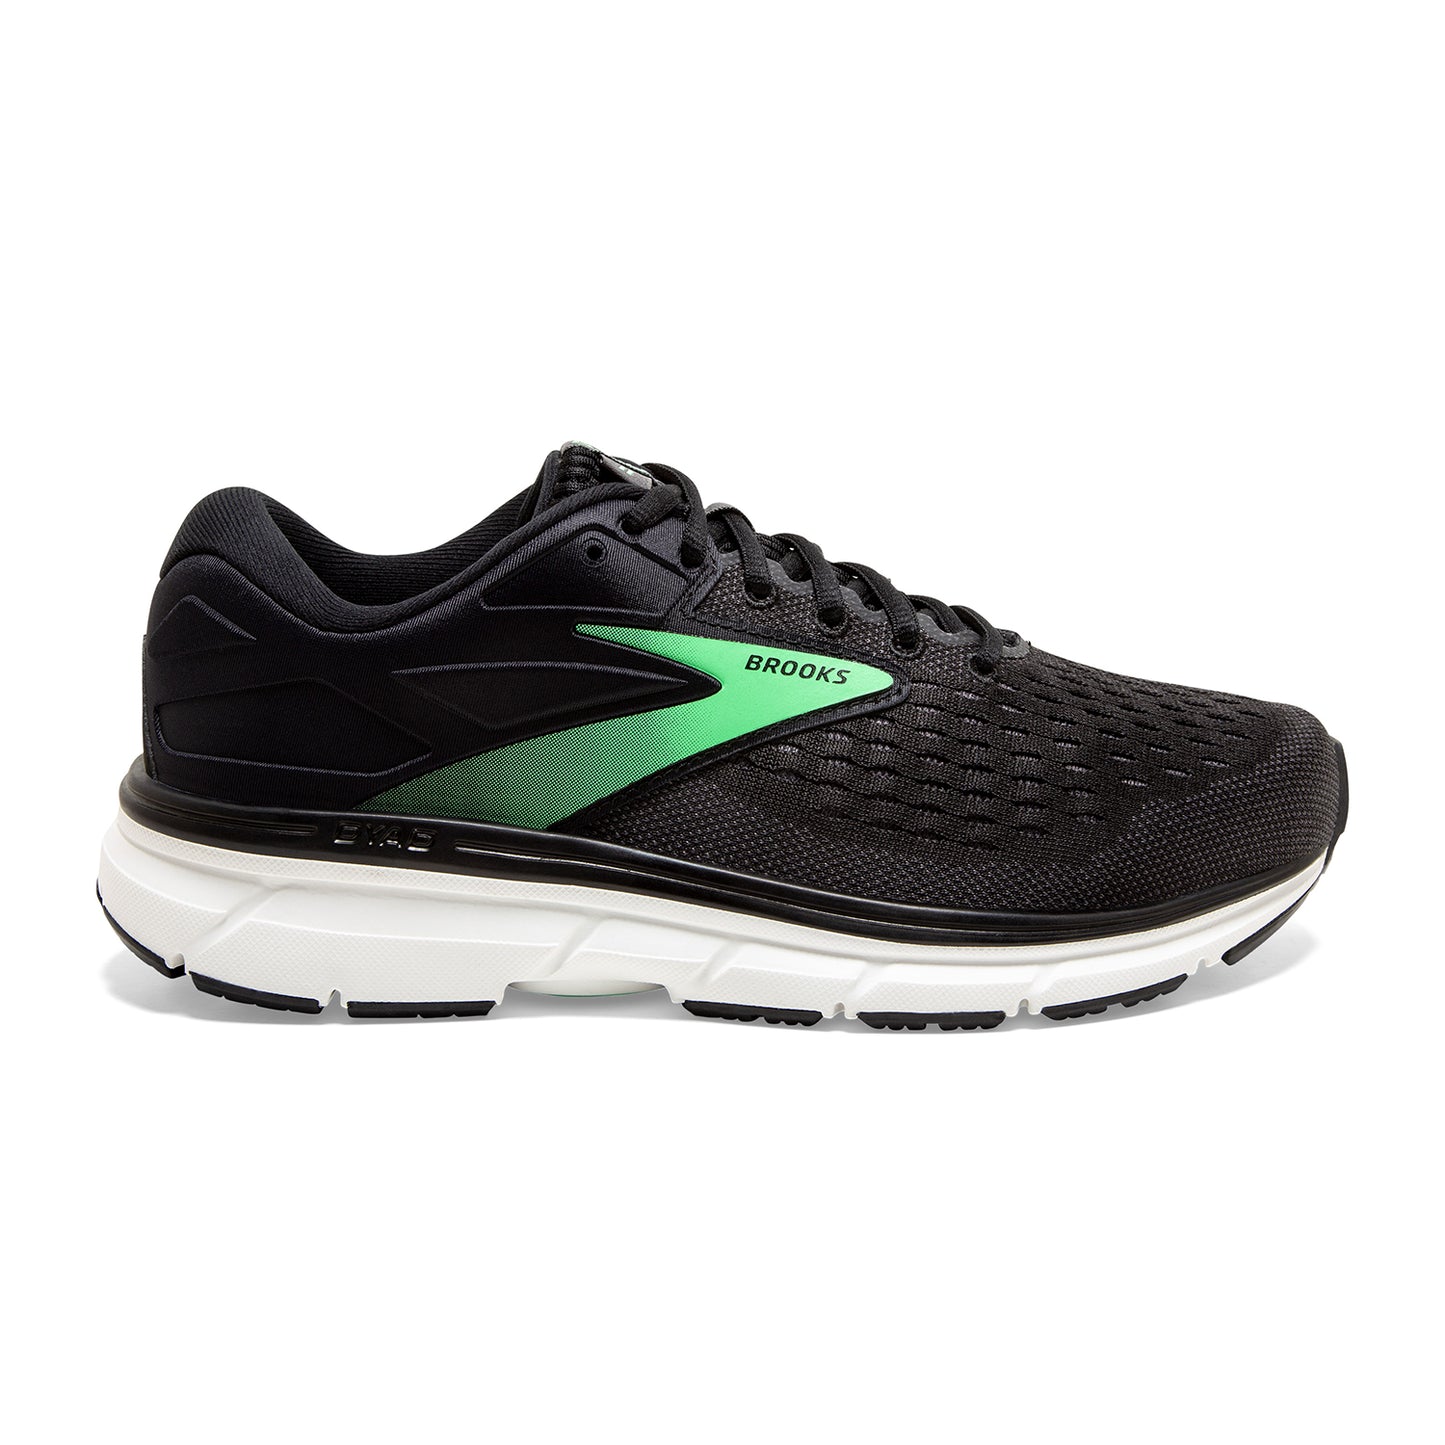 Women's Dyad 11 Running Shoe - Black/Ebony/Green - Regular (B)